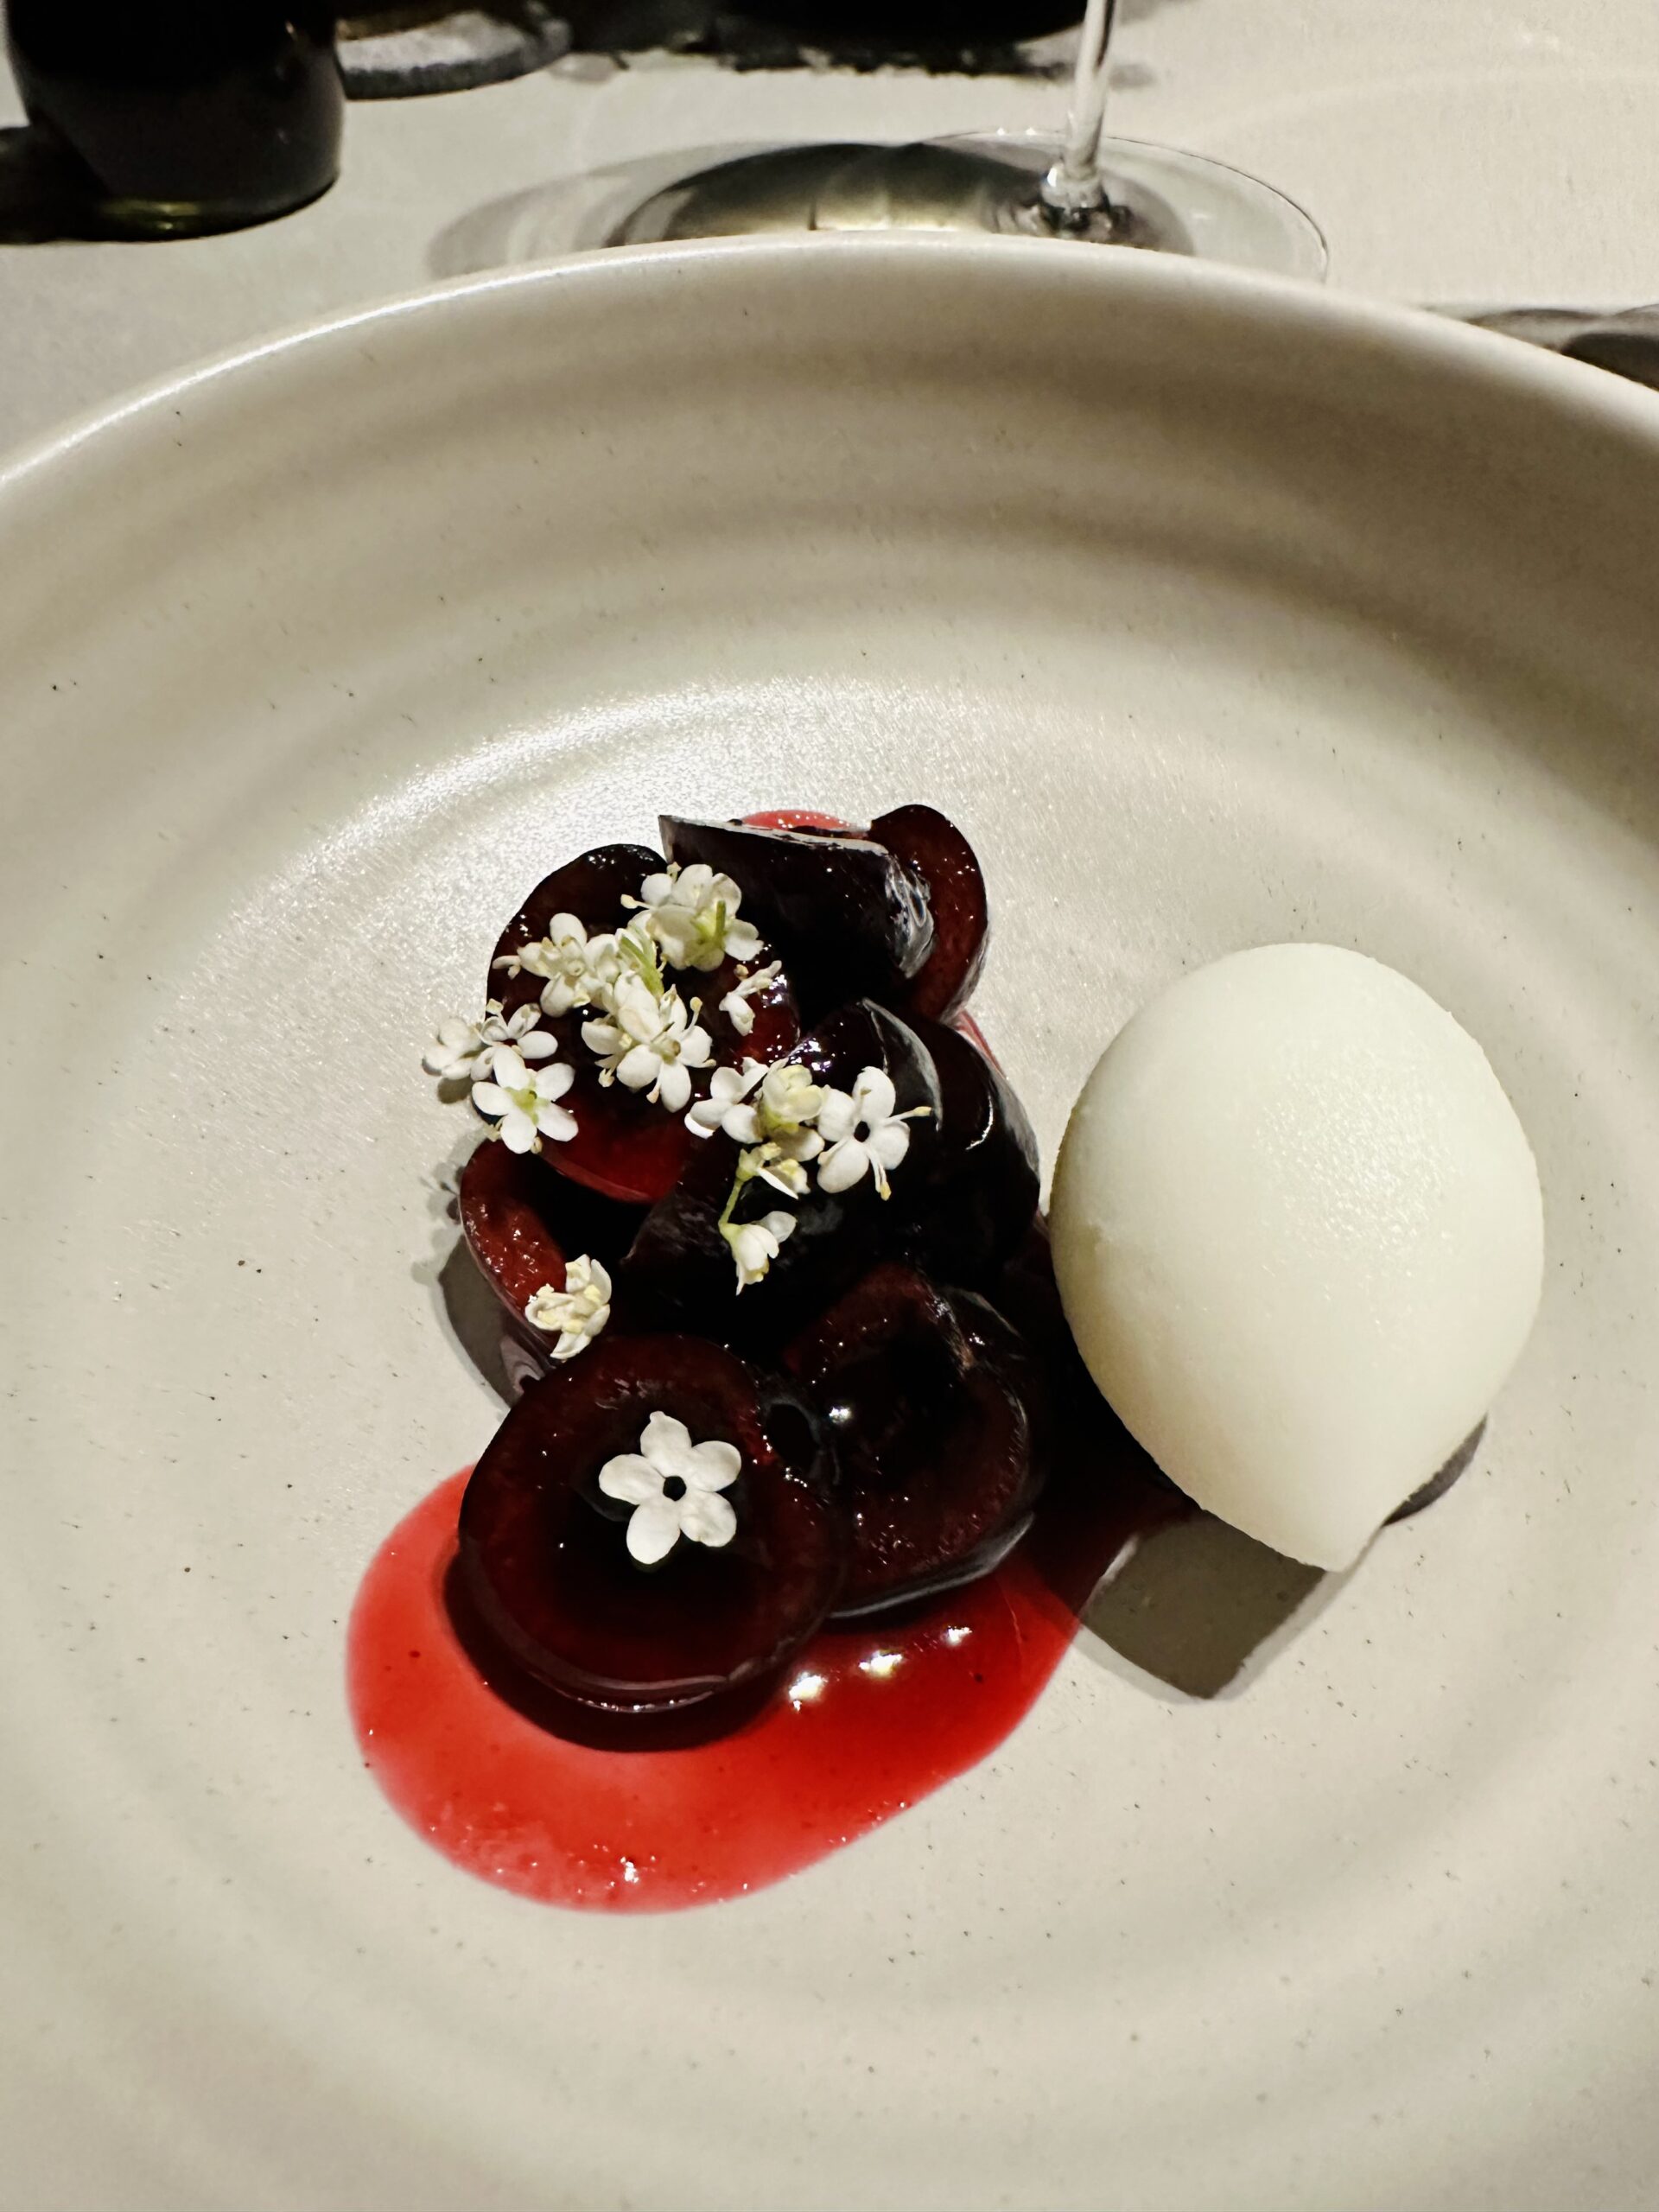 Pujol’s Valle de Bravo Cherry Dessert with Greek yogurt and Sake